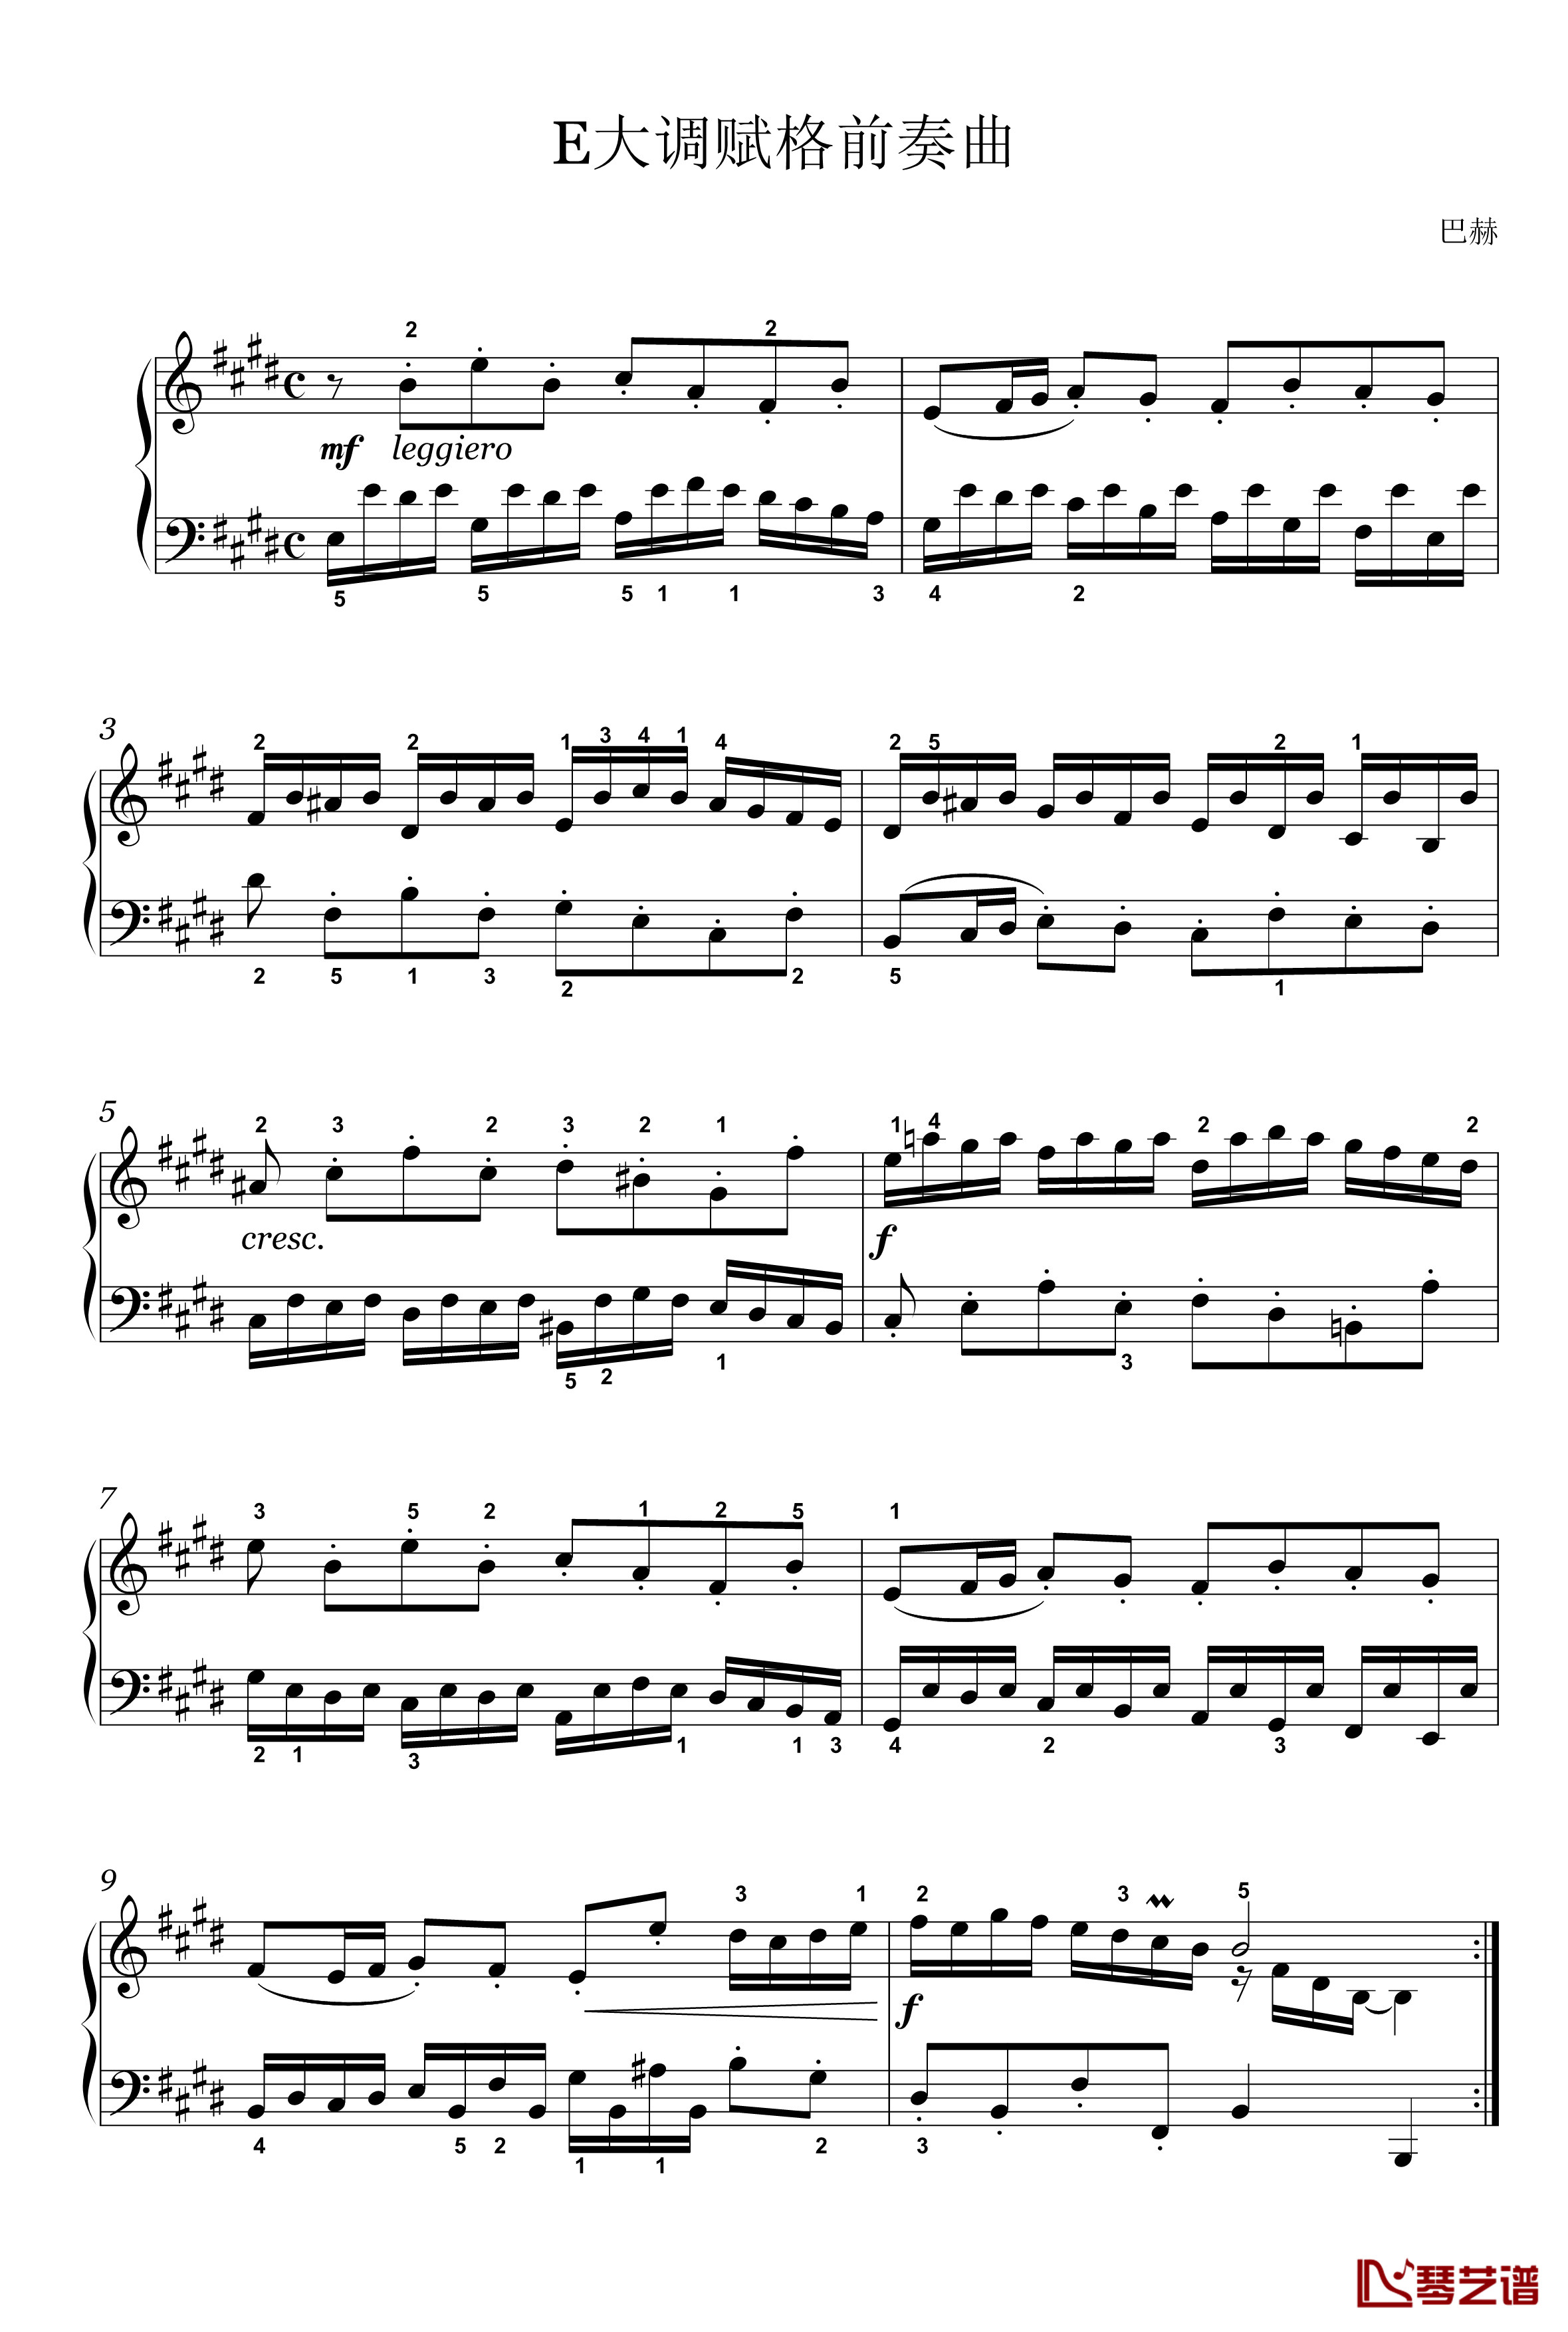 E大调赋格前奏曲钢琴谱-巴赫1